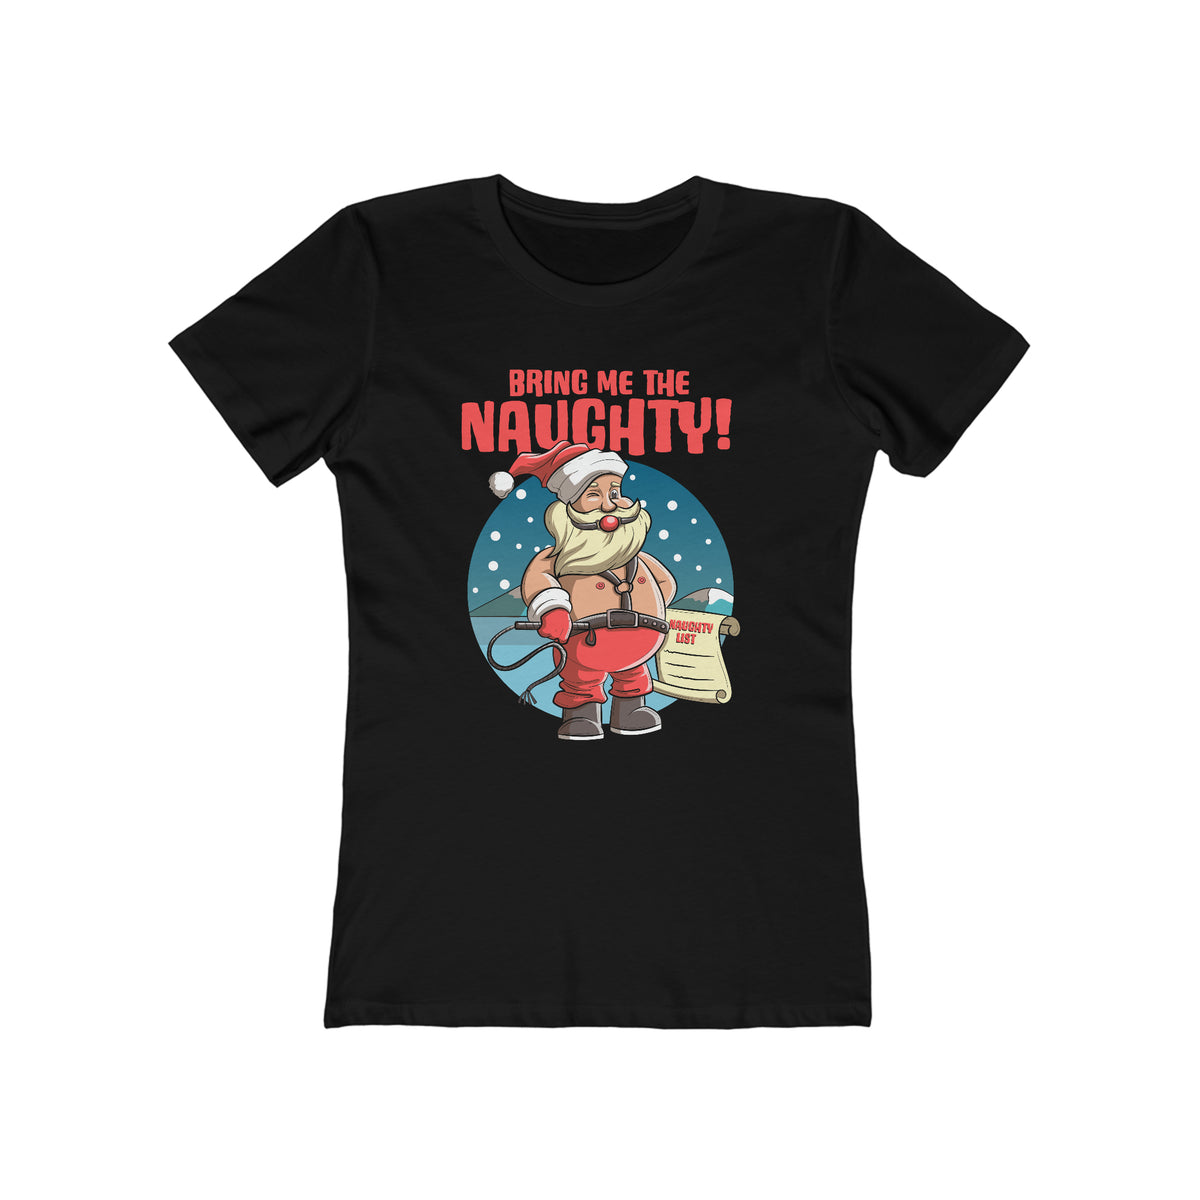 Bring Me The Naughty! - Women’s T-Shirt